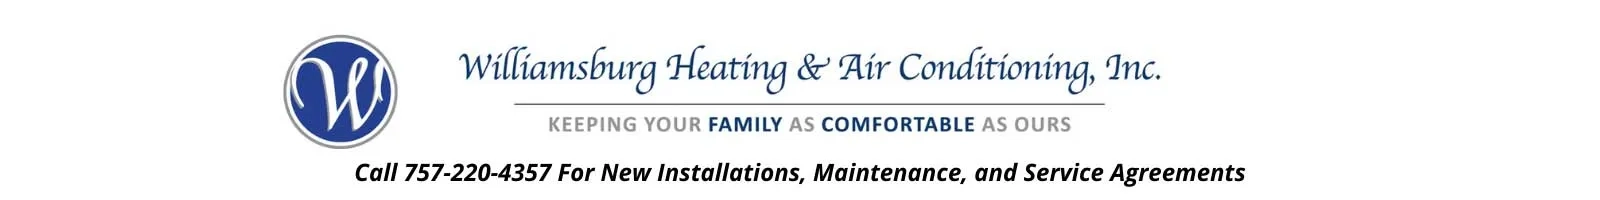 Williamsburg Heating & Air Conditioning, Inc. Logo